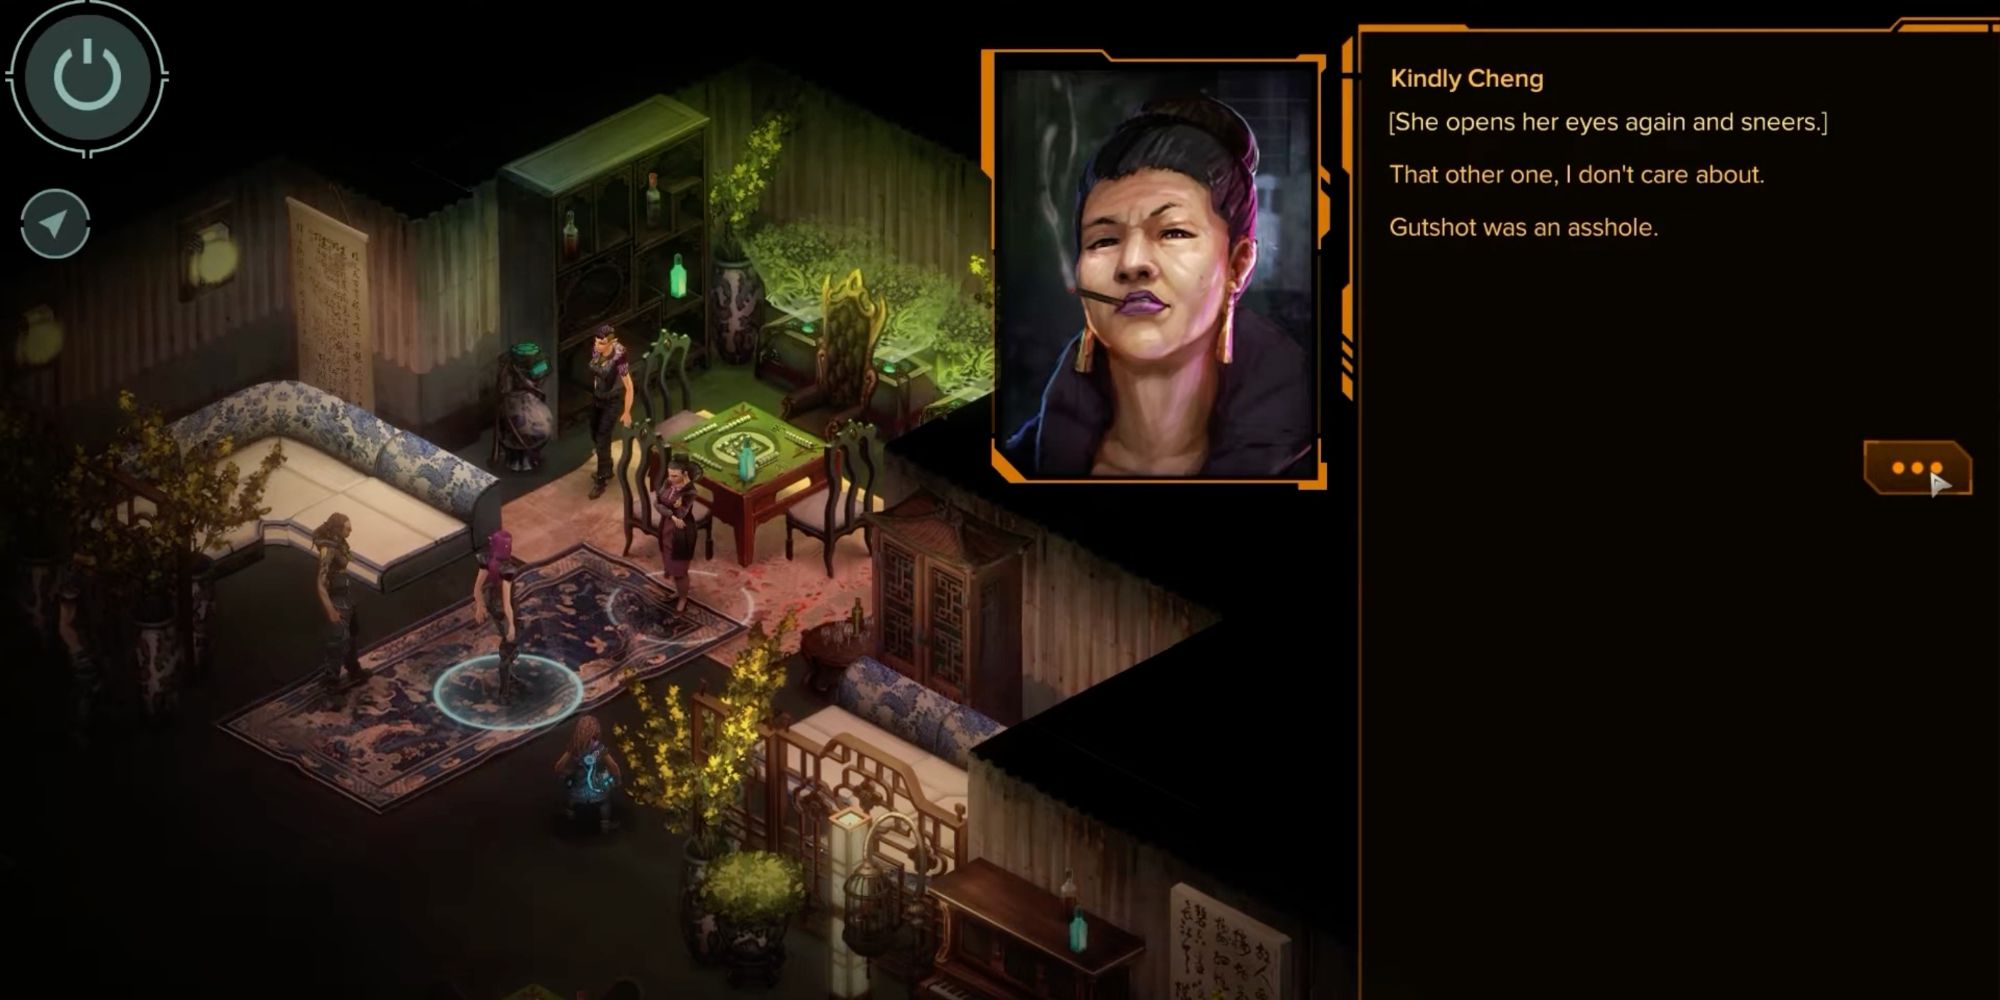 A screenshot from Shadowrun Hong Kong, showing Kindly Cheng describing the dead Gutshot as an asshole